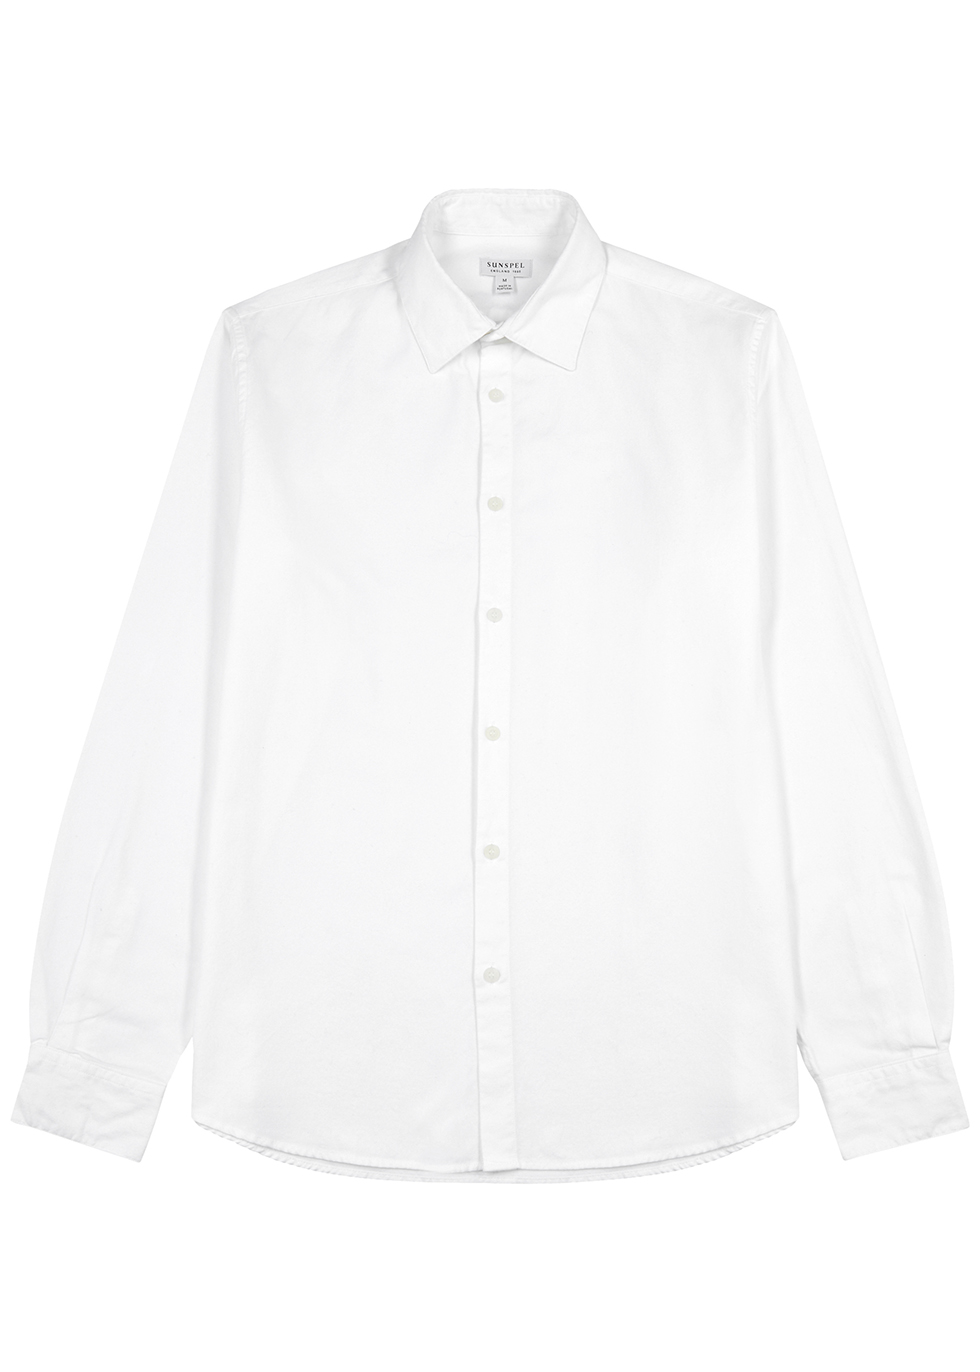 Sunspel Cotton Oxford shirt - Harvey Nichols